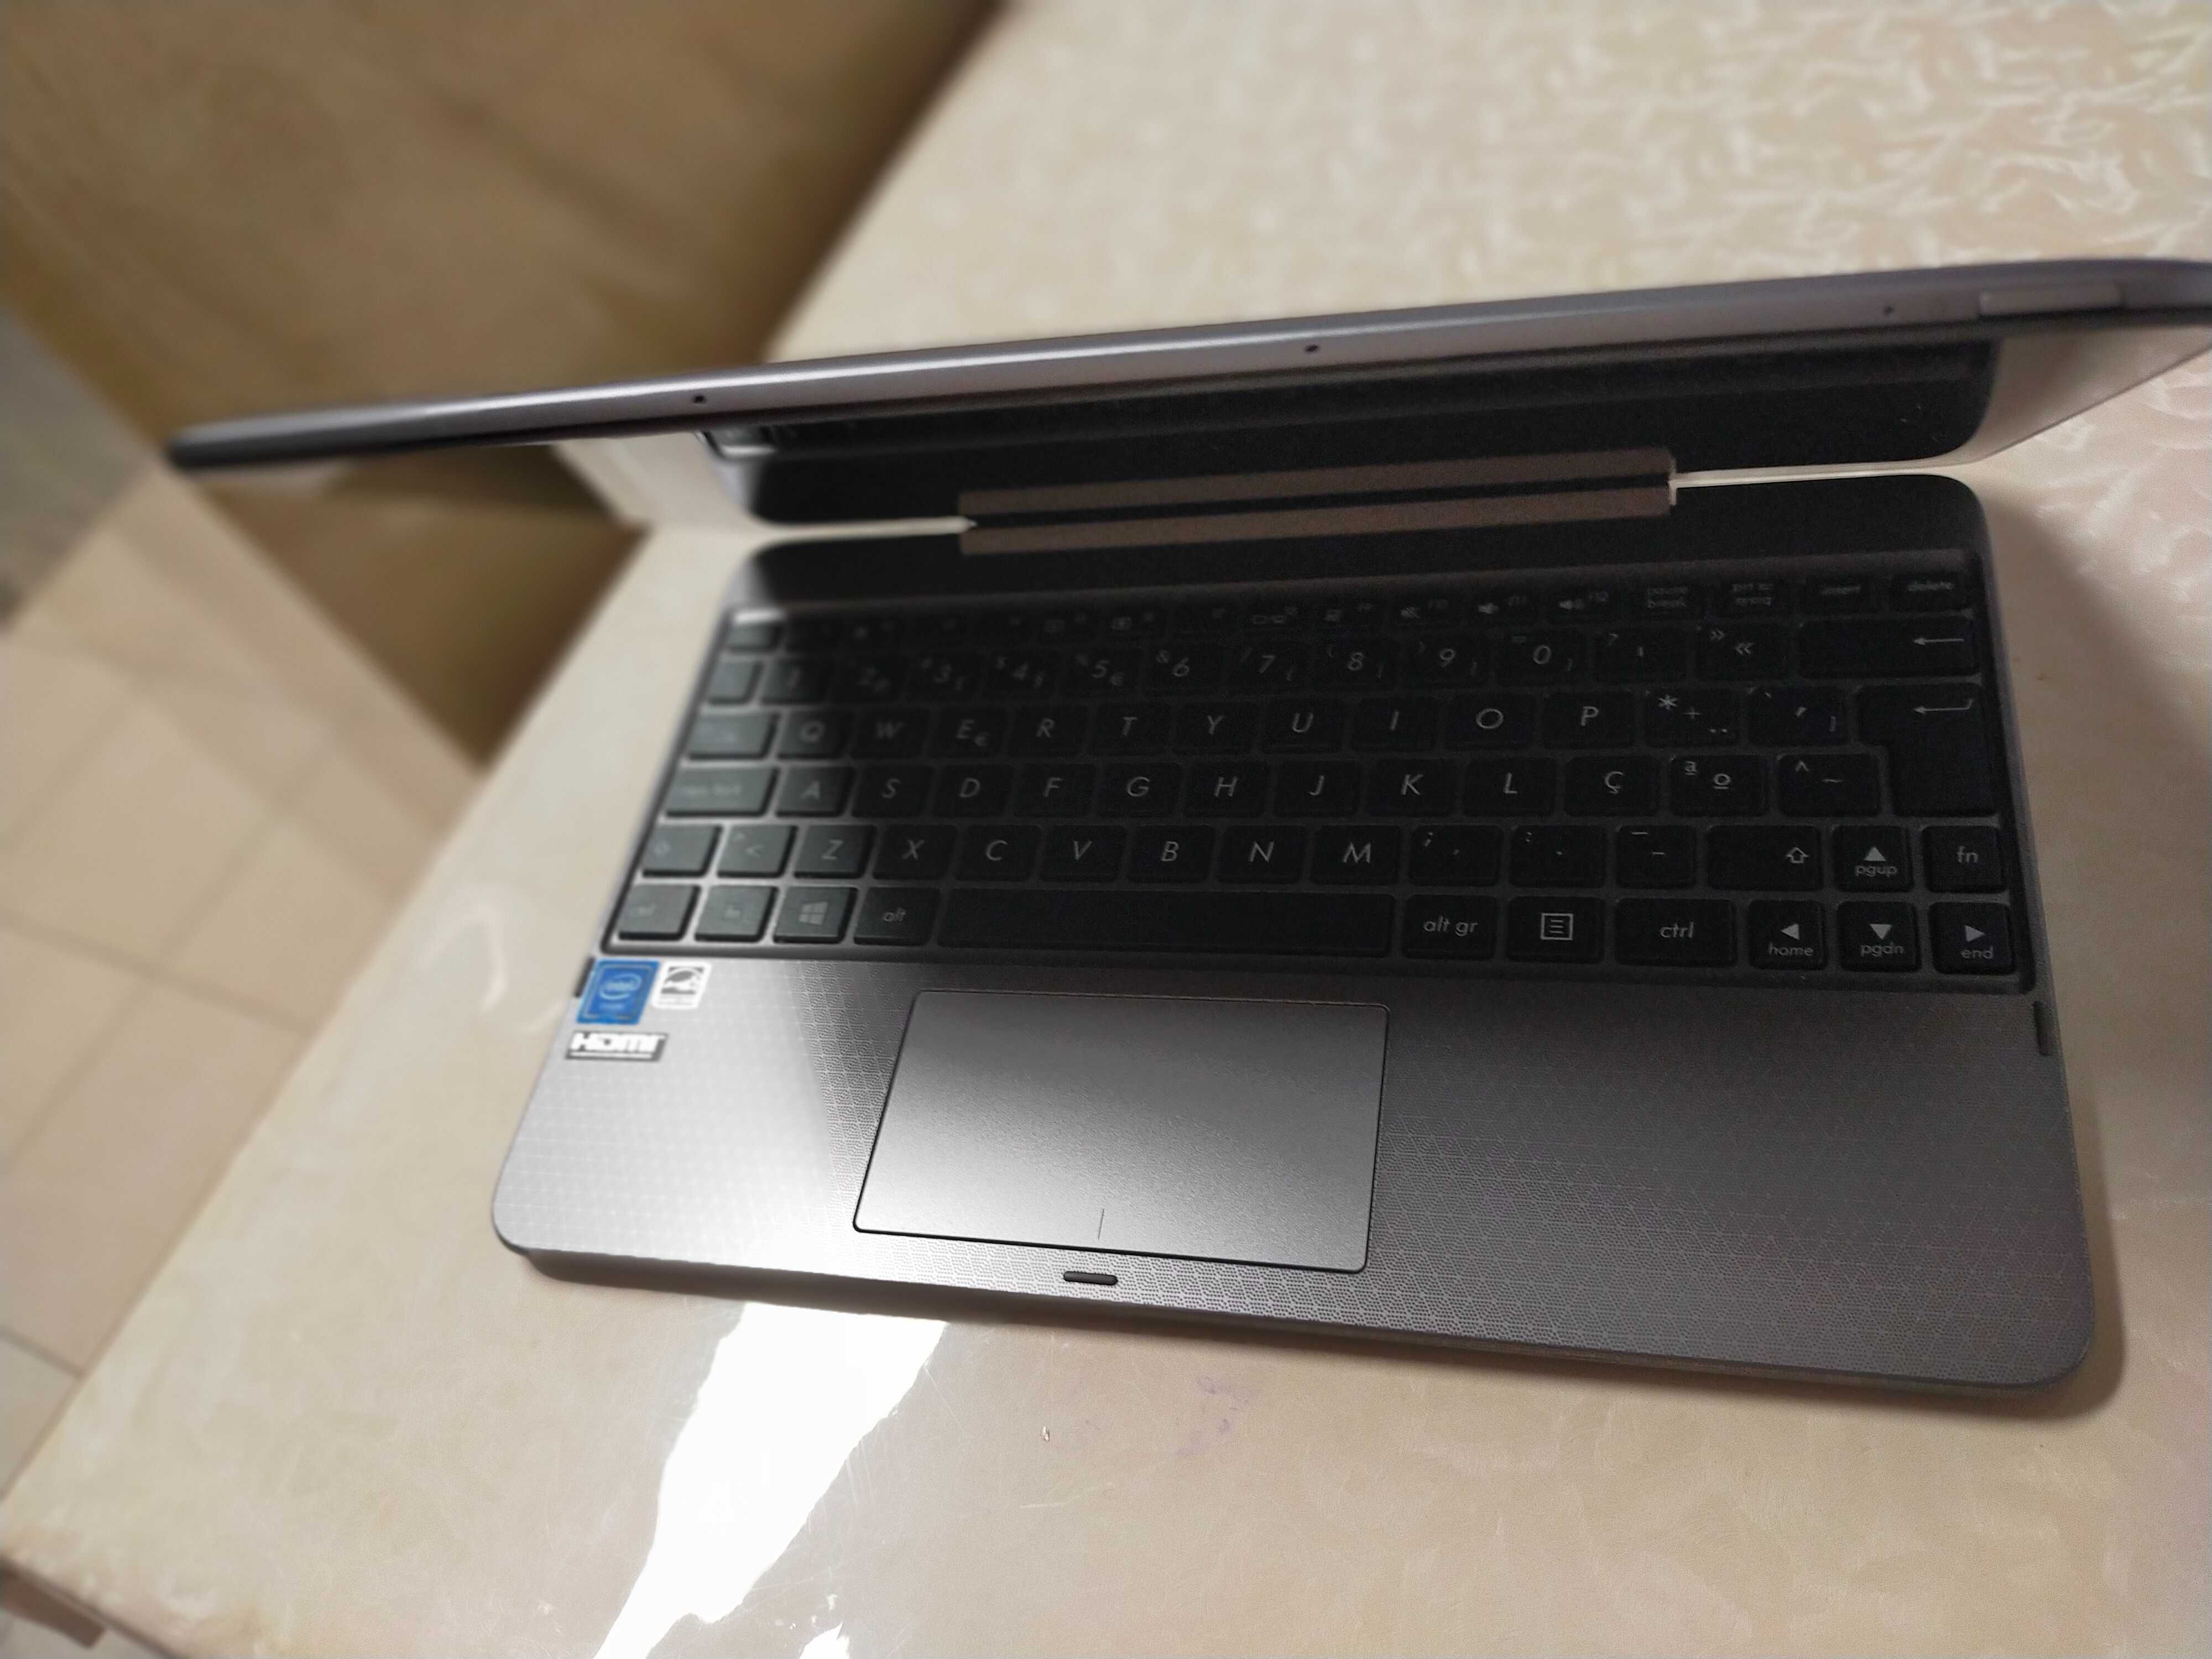 Laptop , ASUS, boa oportunidade, sem uso , considerado como novo